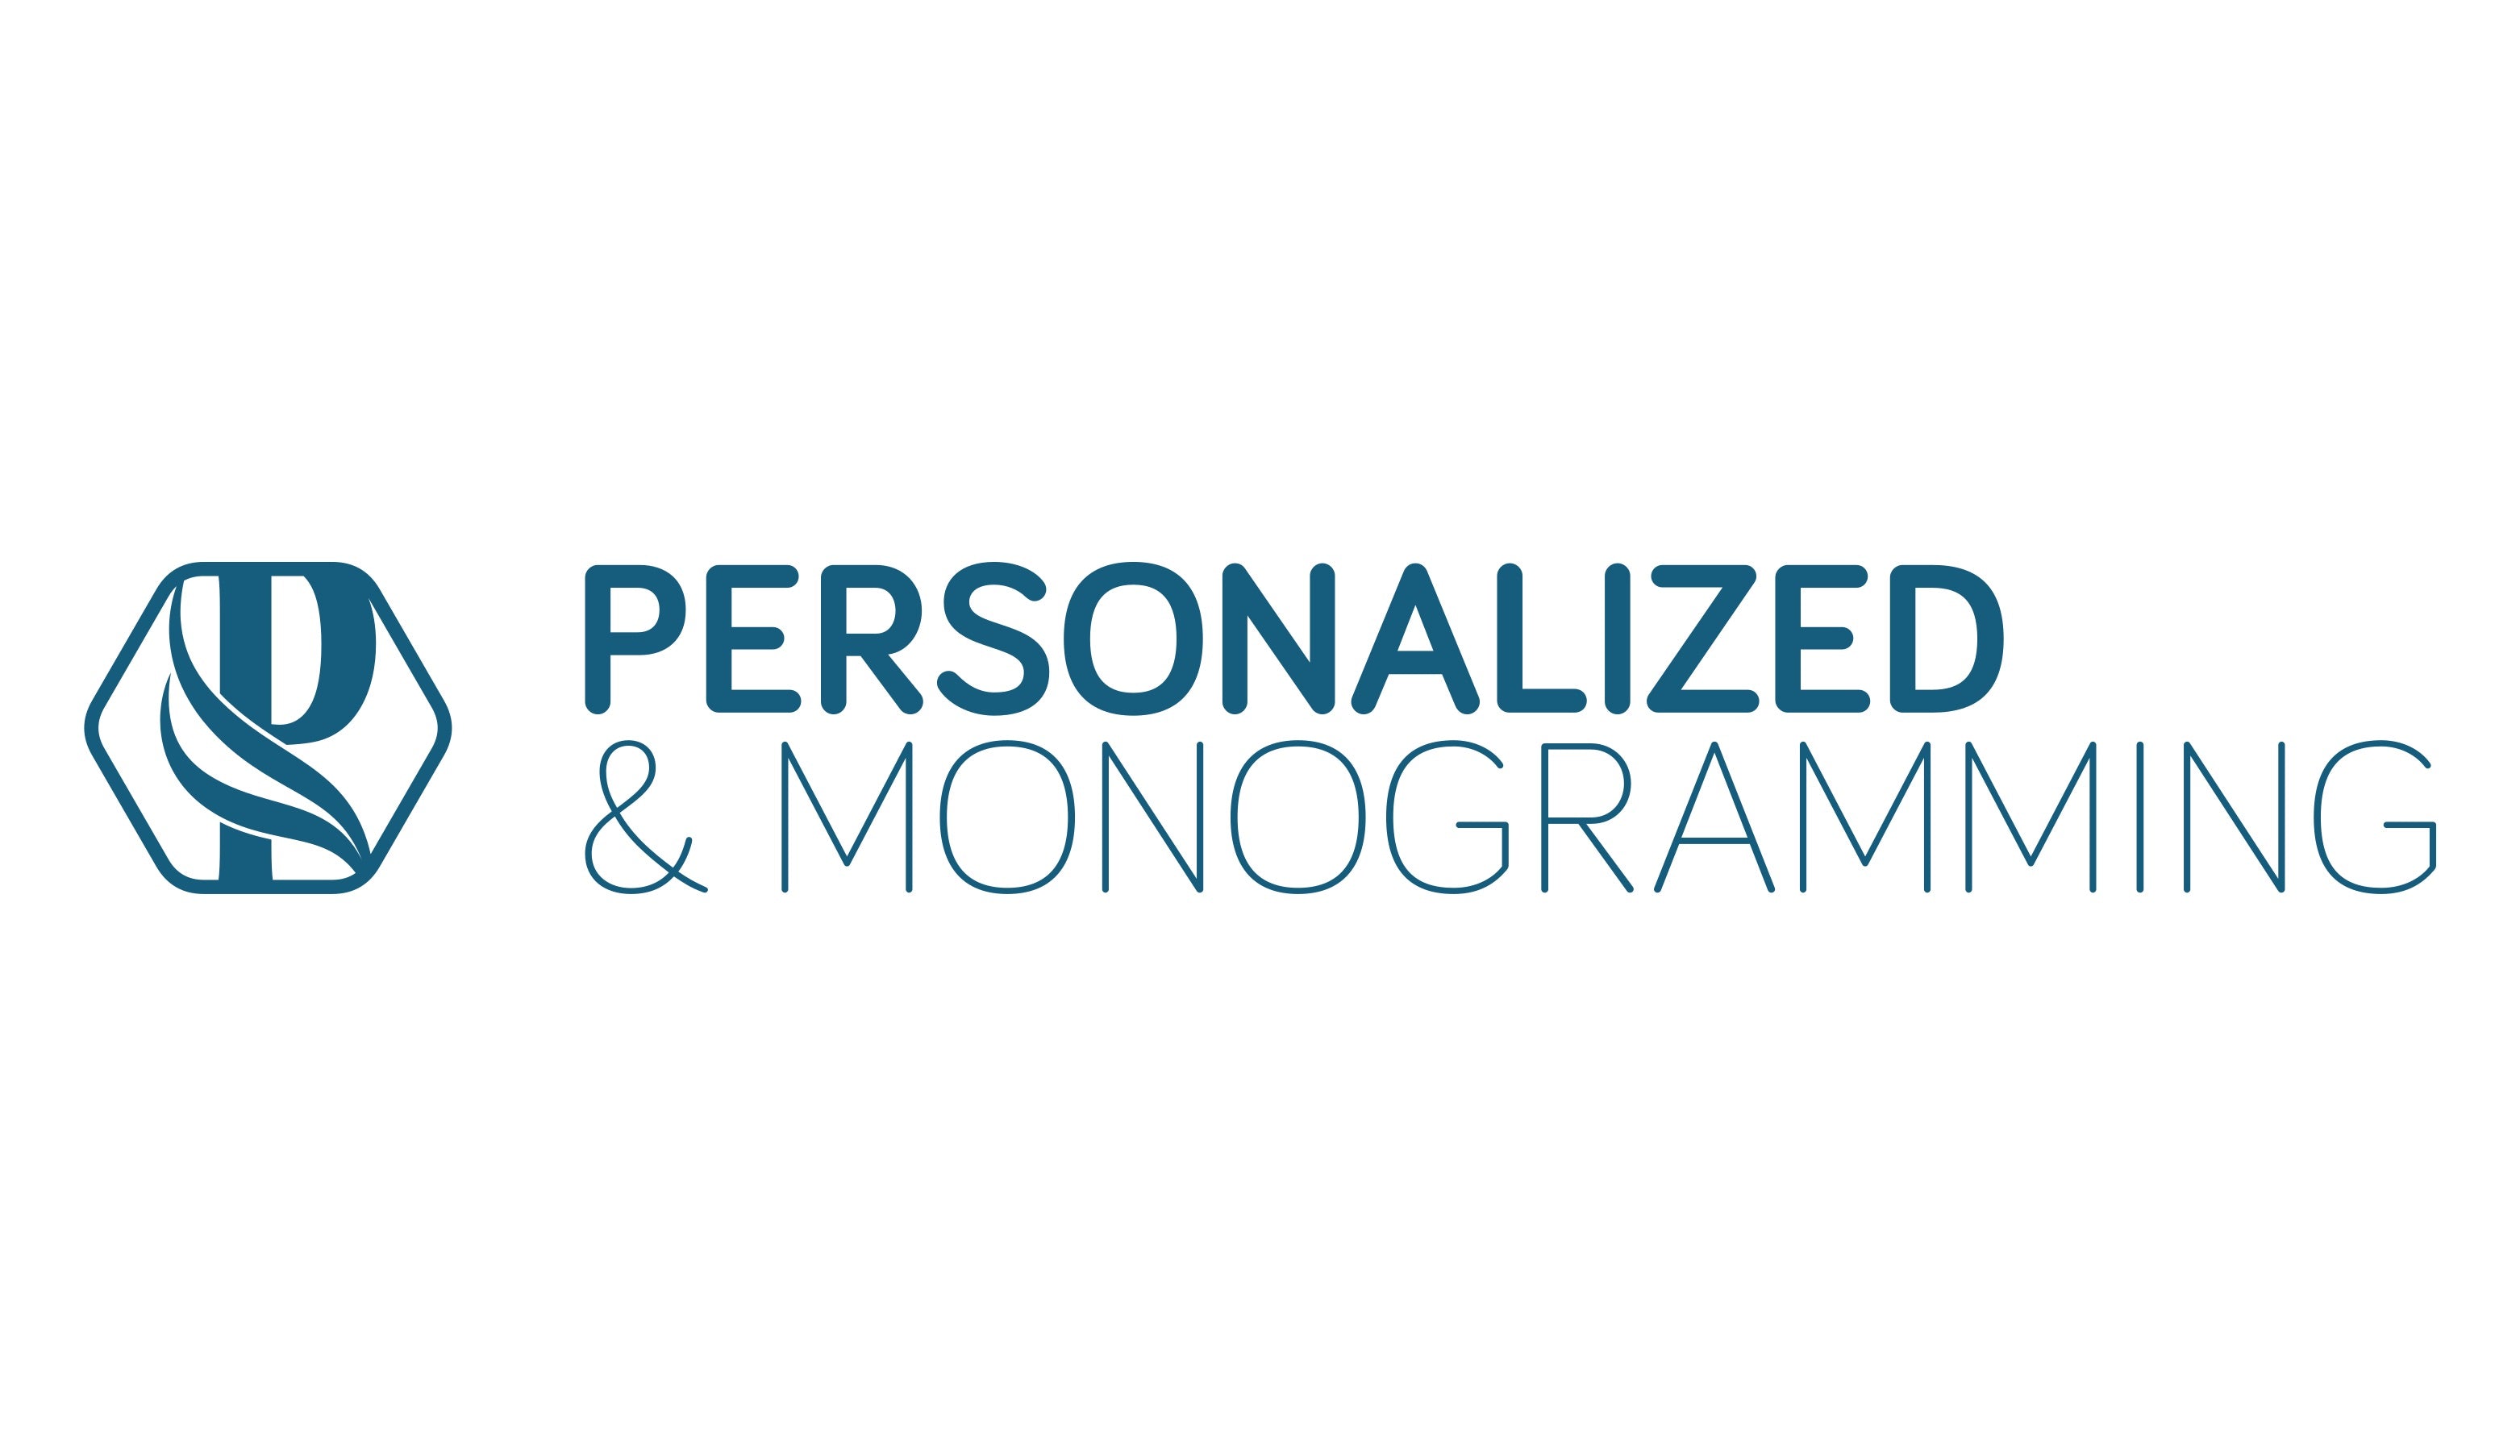 Personalize & Monogramming